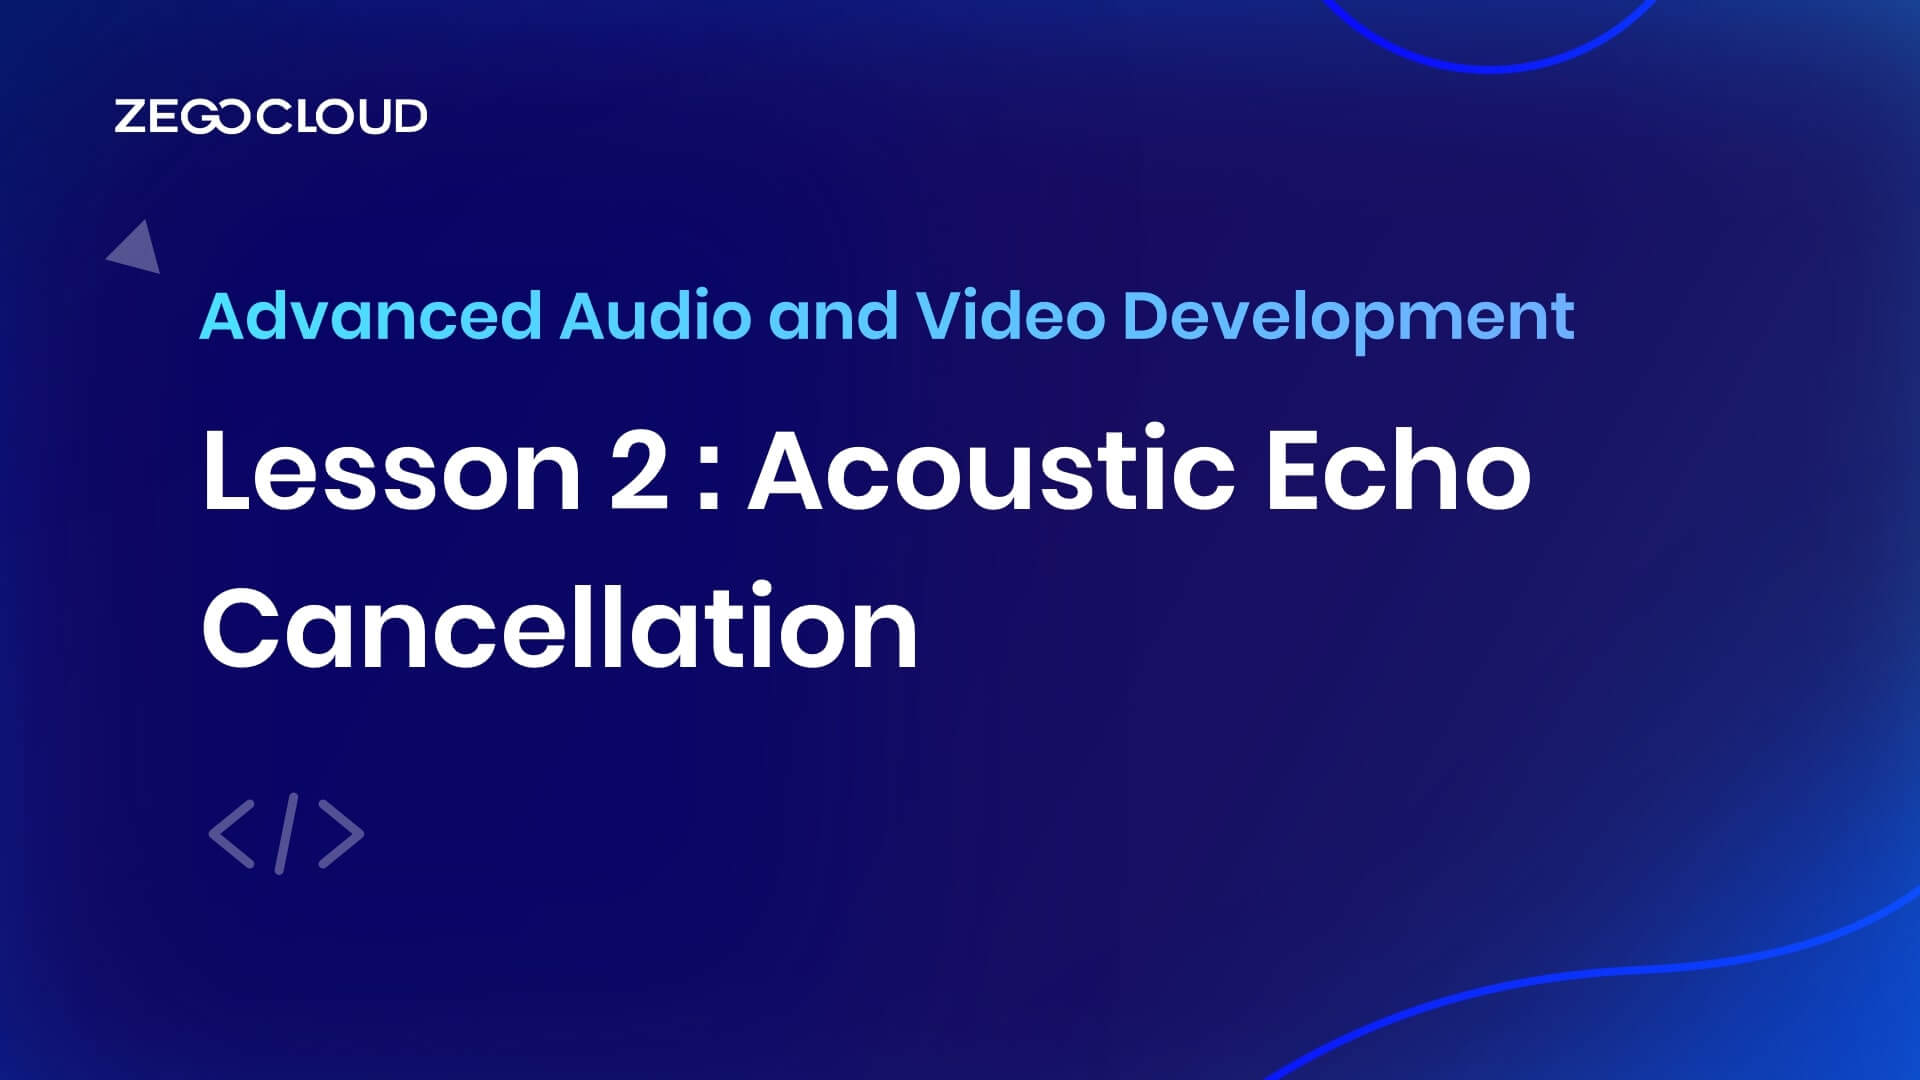 Lesson 2: Acoustic Echo Cancellation